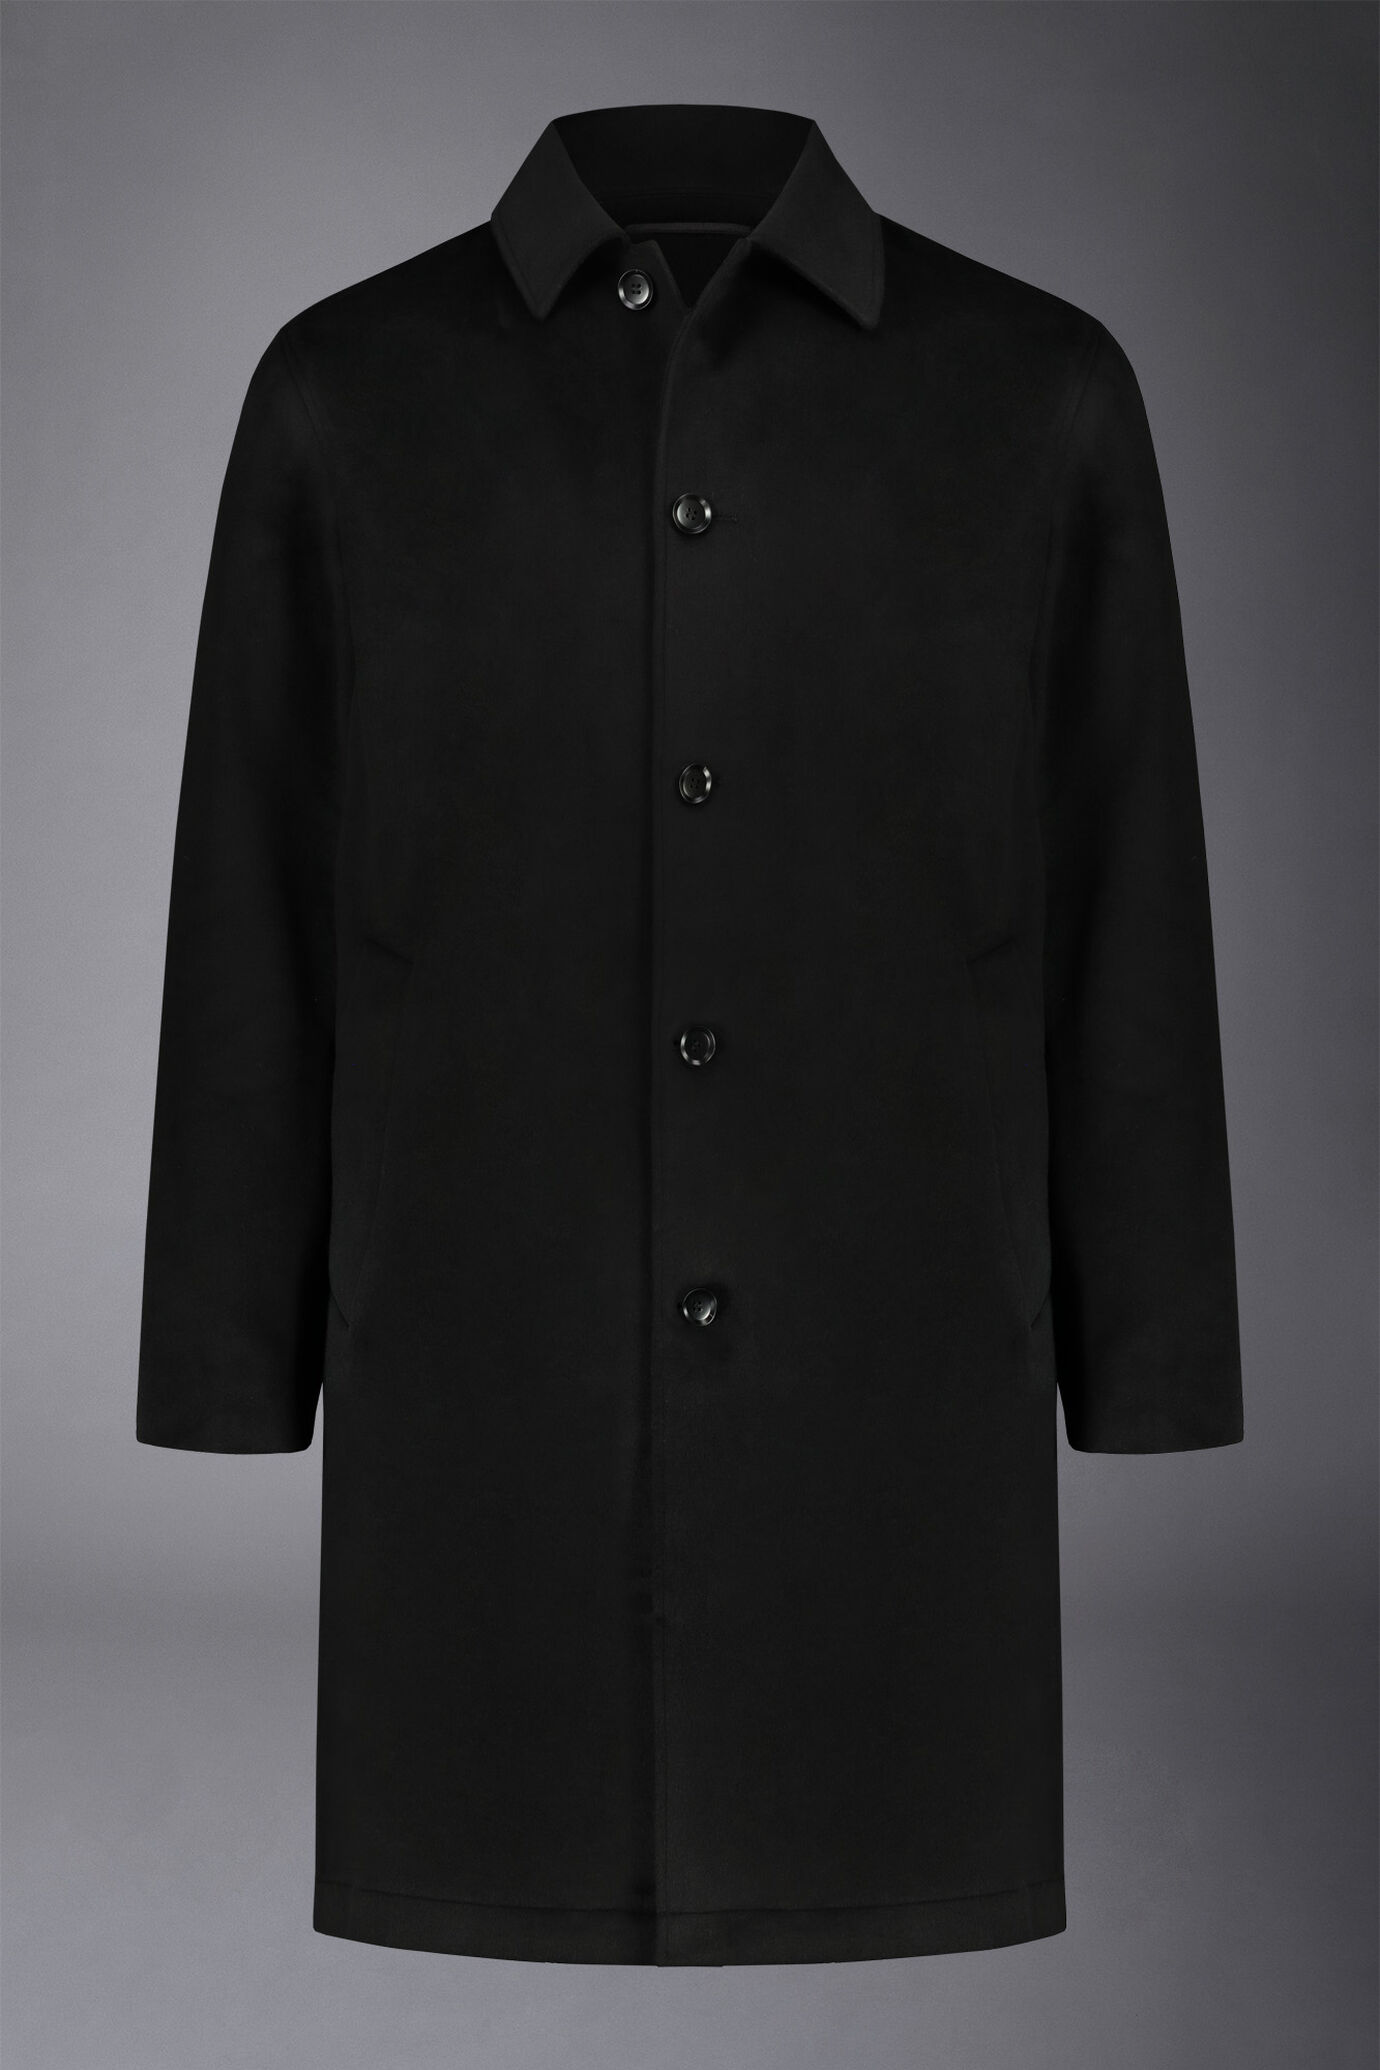 Men's single-breasted wool blend coat